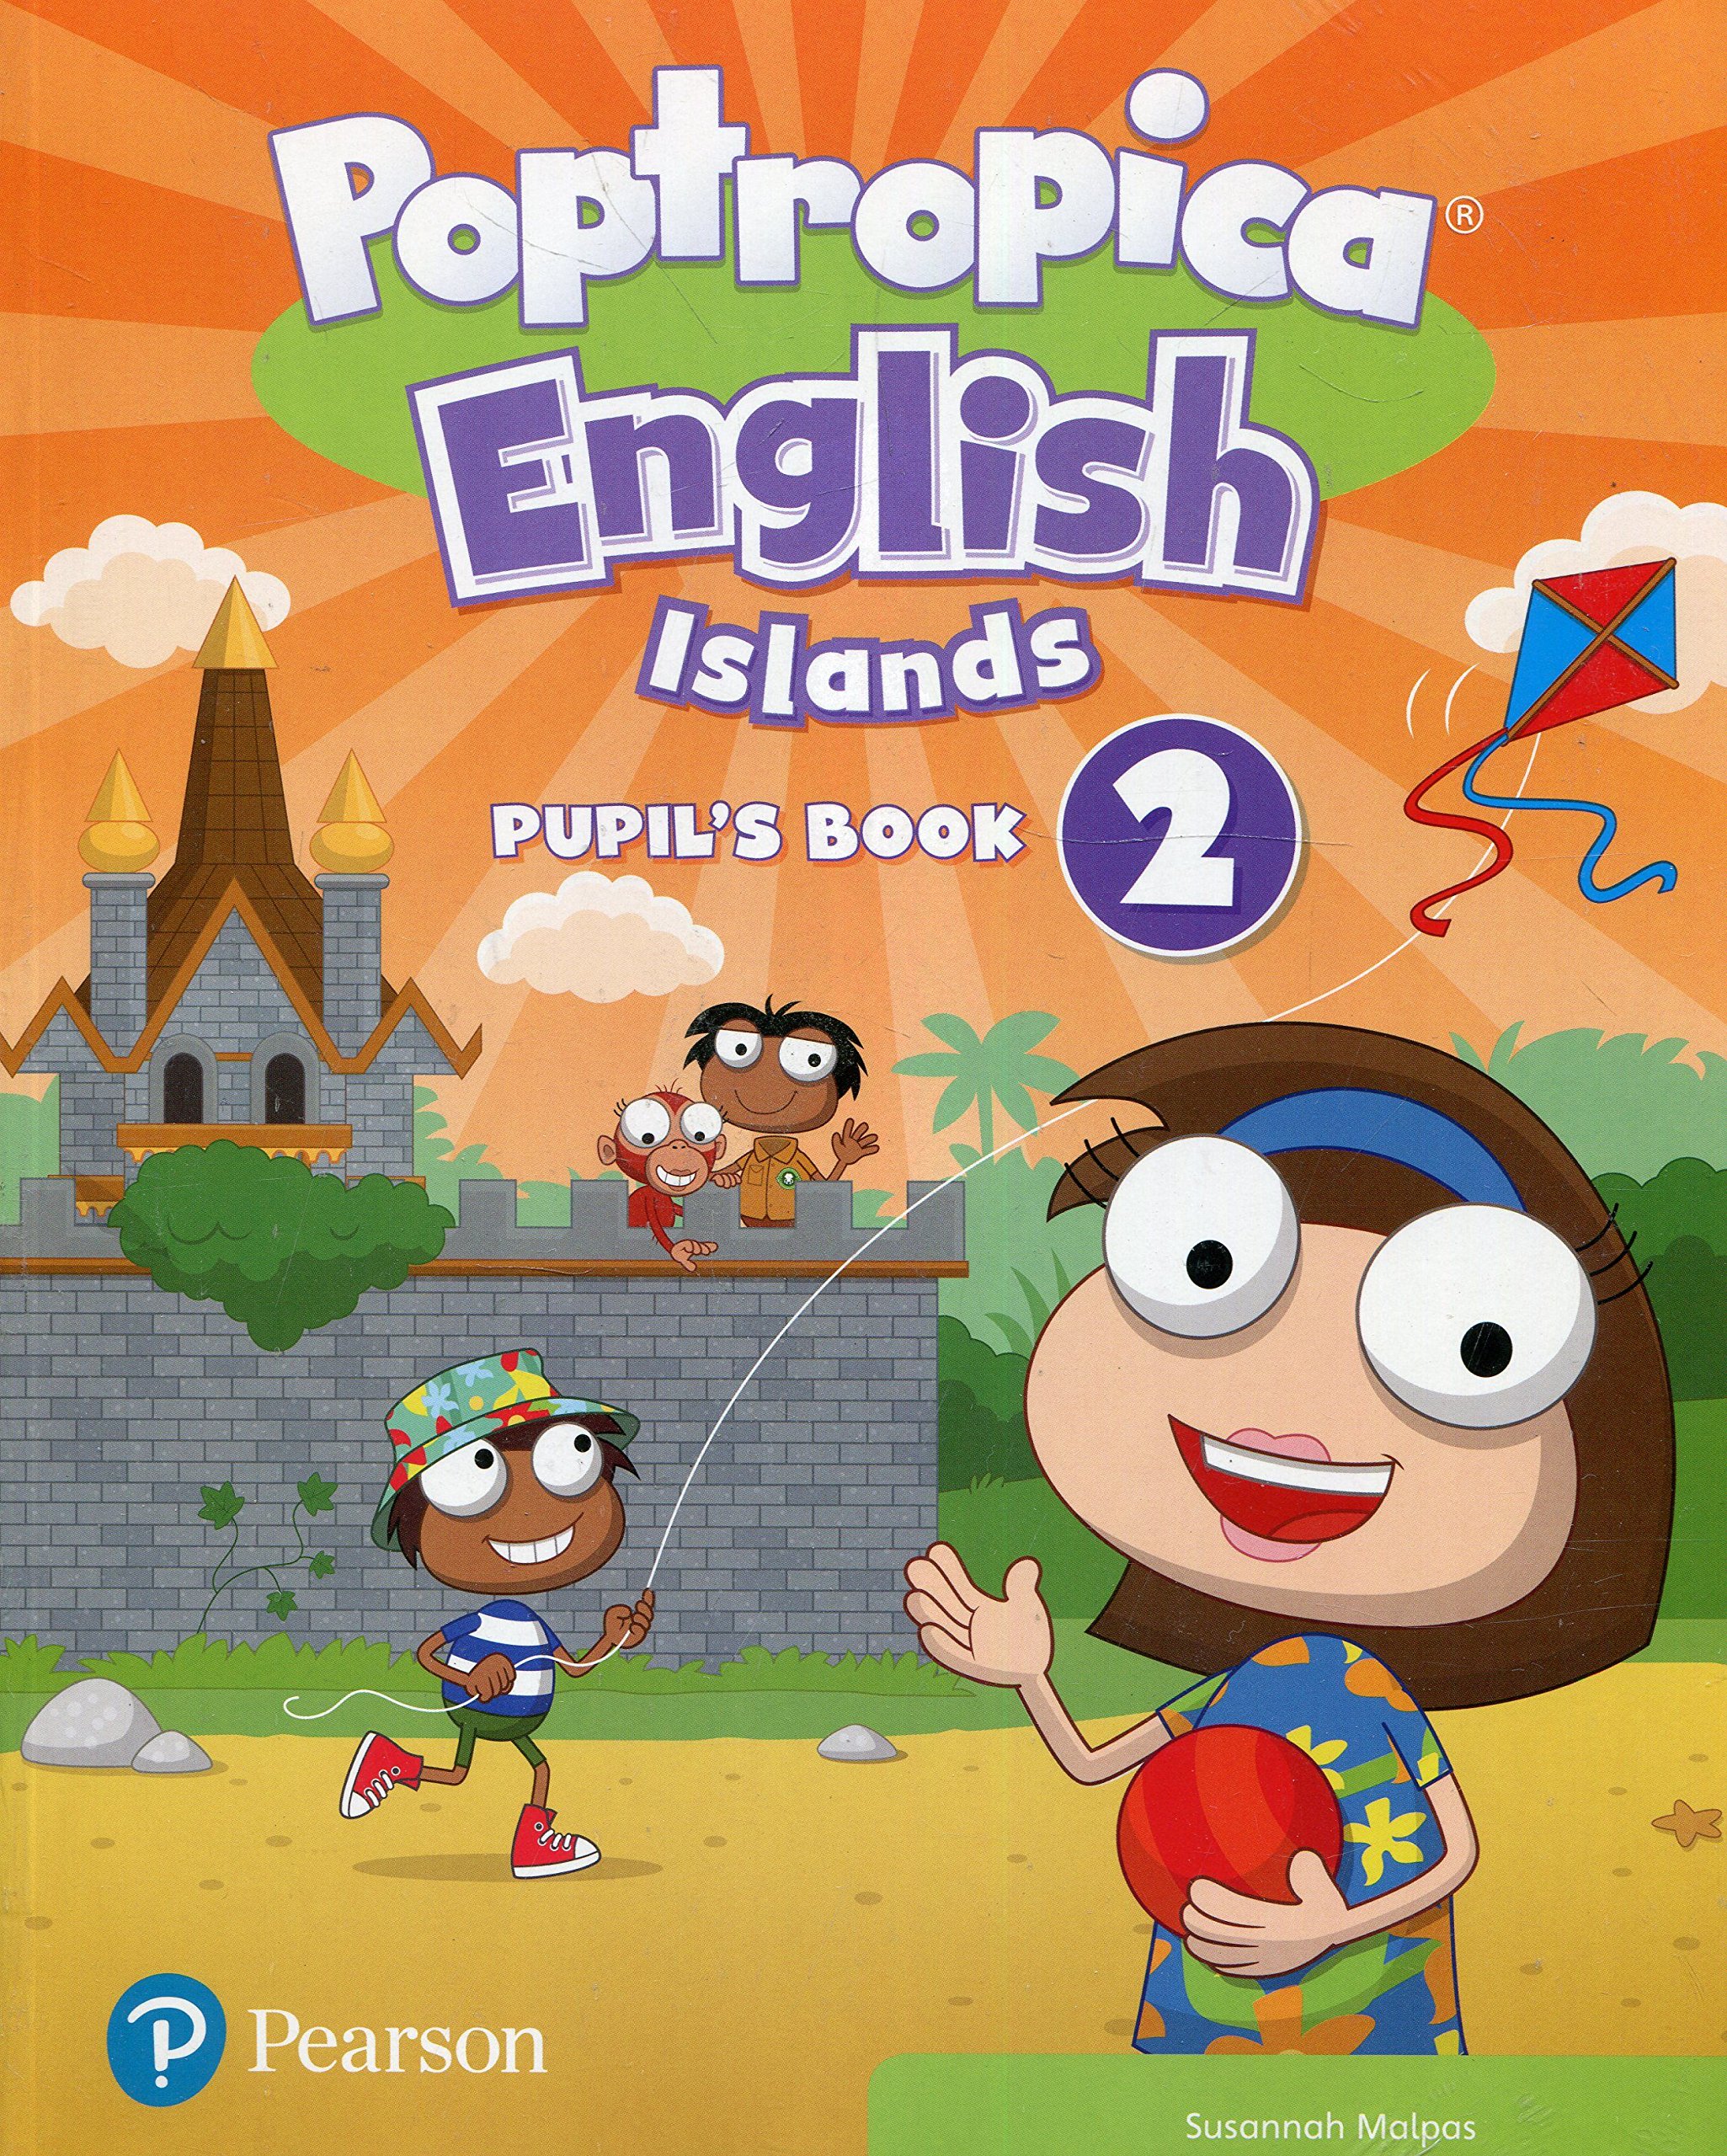 Pop english. Poptropica 2 pupil's book. Poptropica English Islands 2. Pearson English Poptropica 2. Poptropica English Islands.